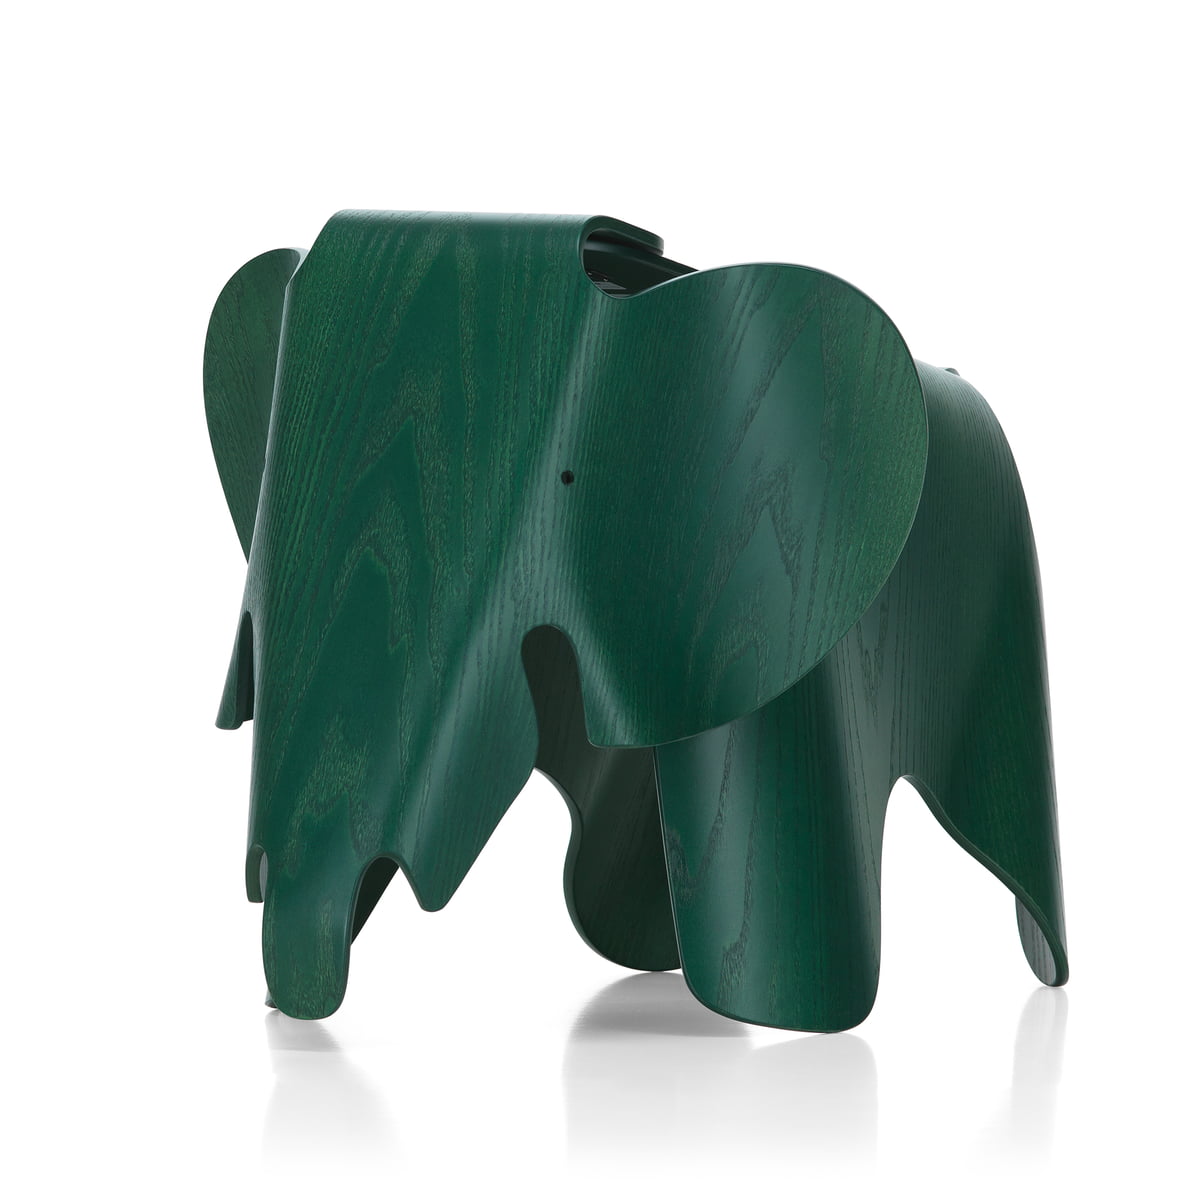 Vitra - Eames Elephant | Connox